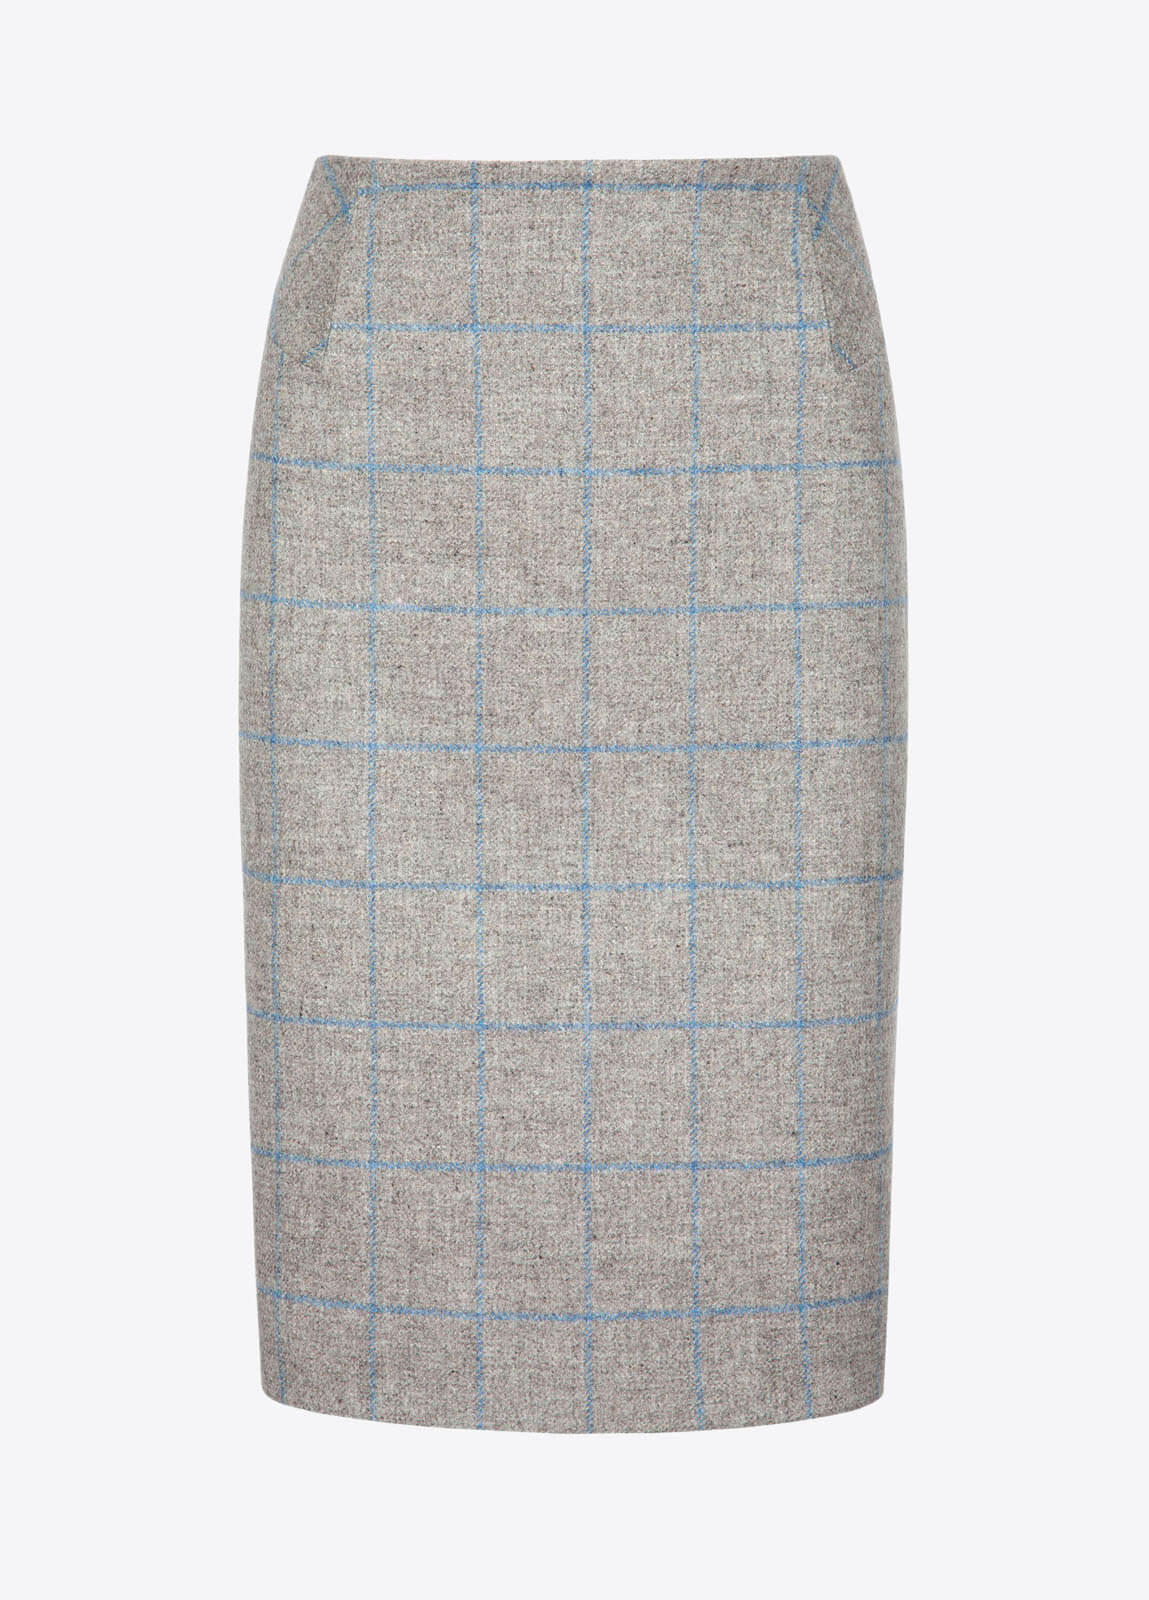 Fern Tweed Skirt - Shale